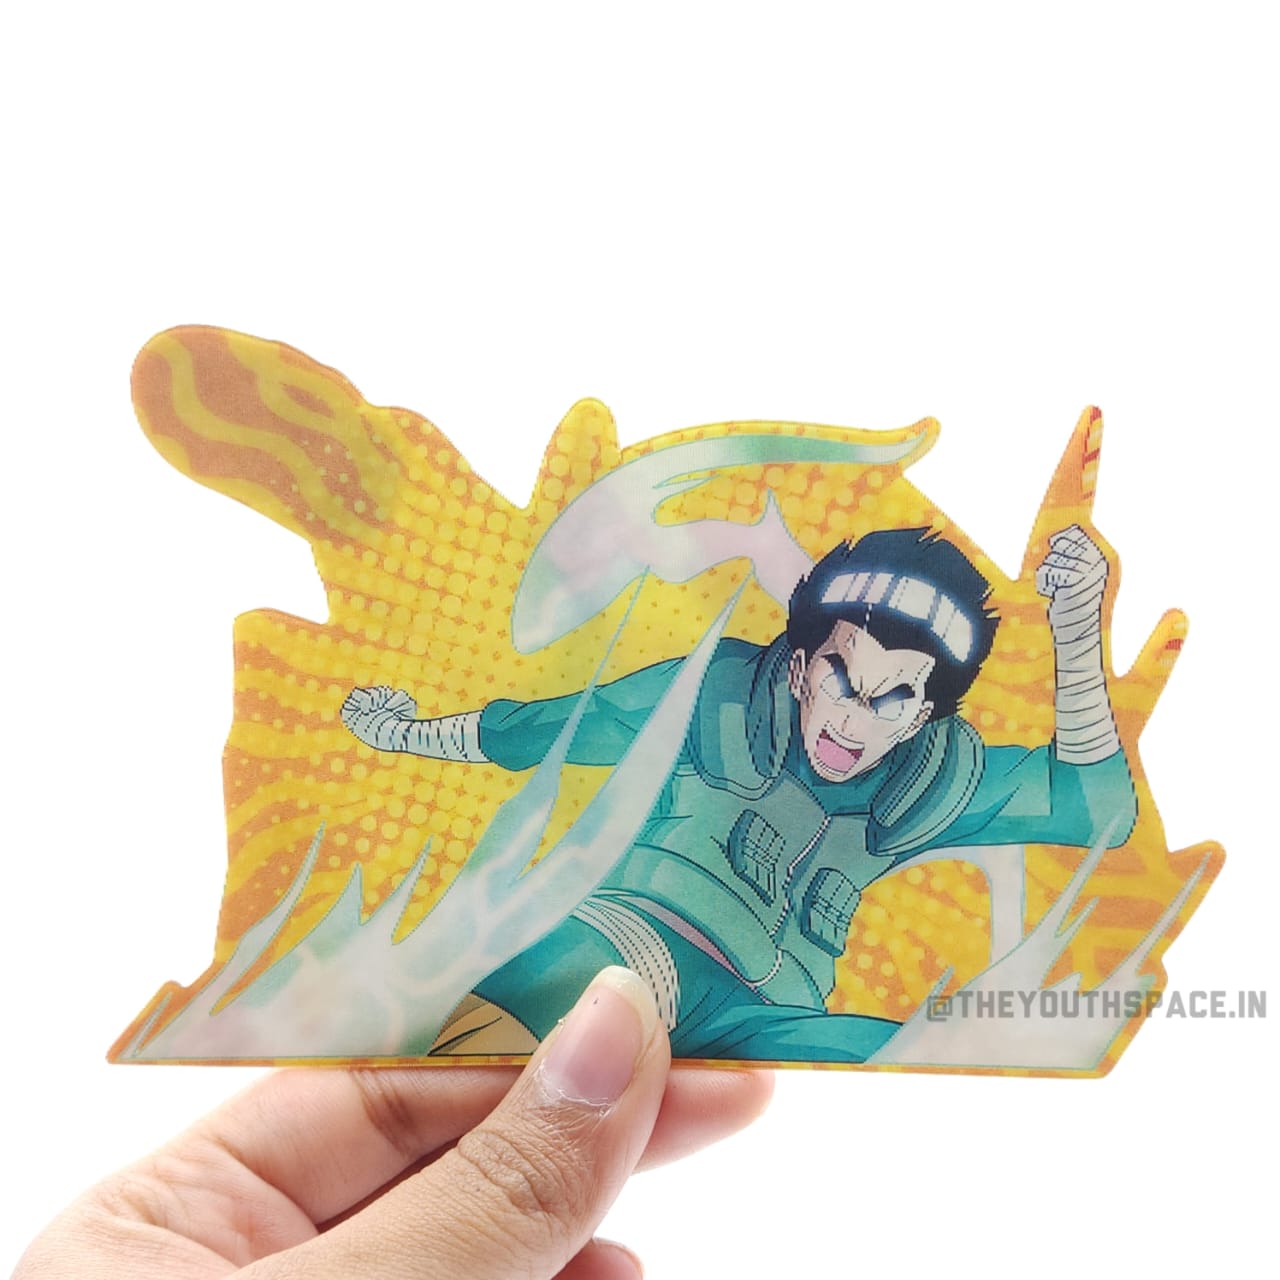 Rock Lee x Might Guy 3D motion sticker